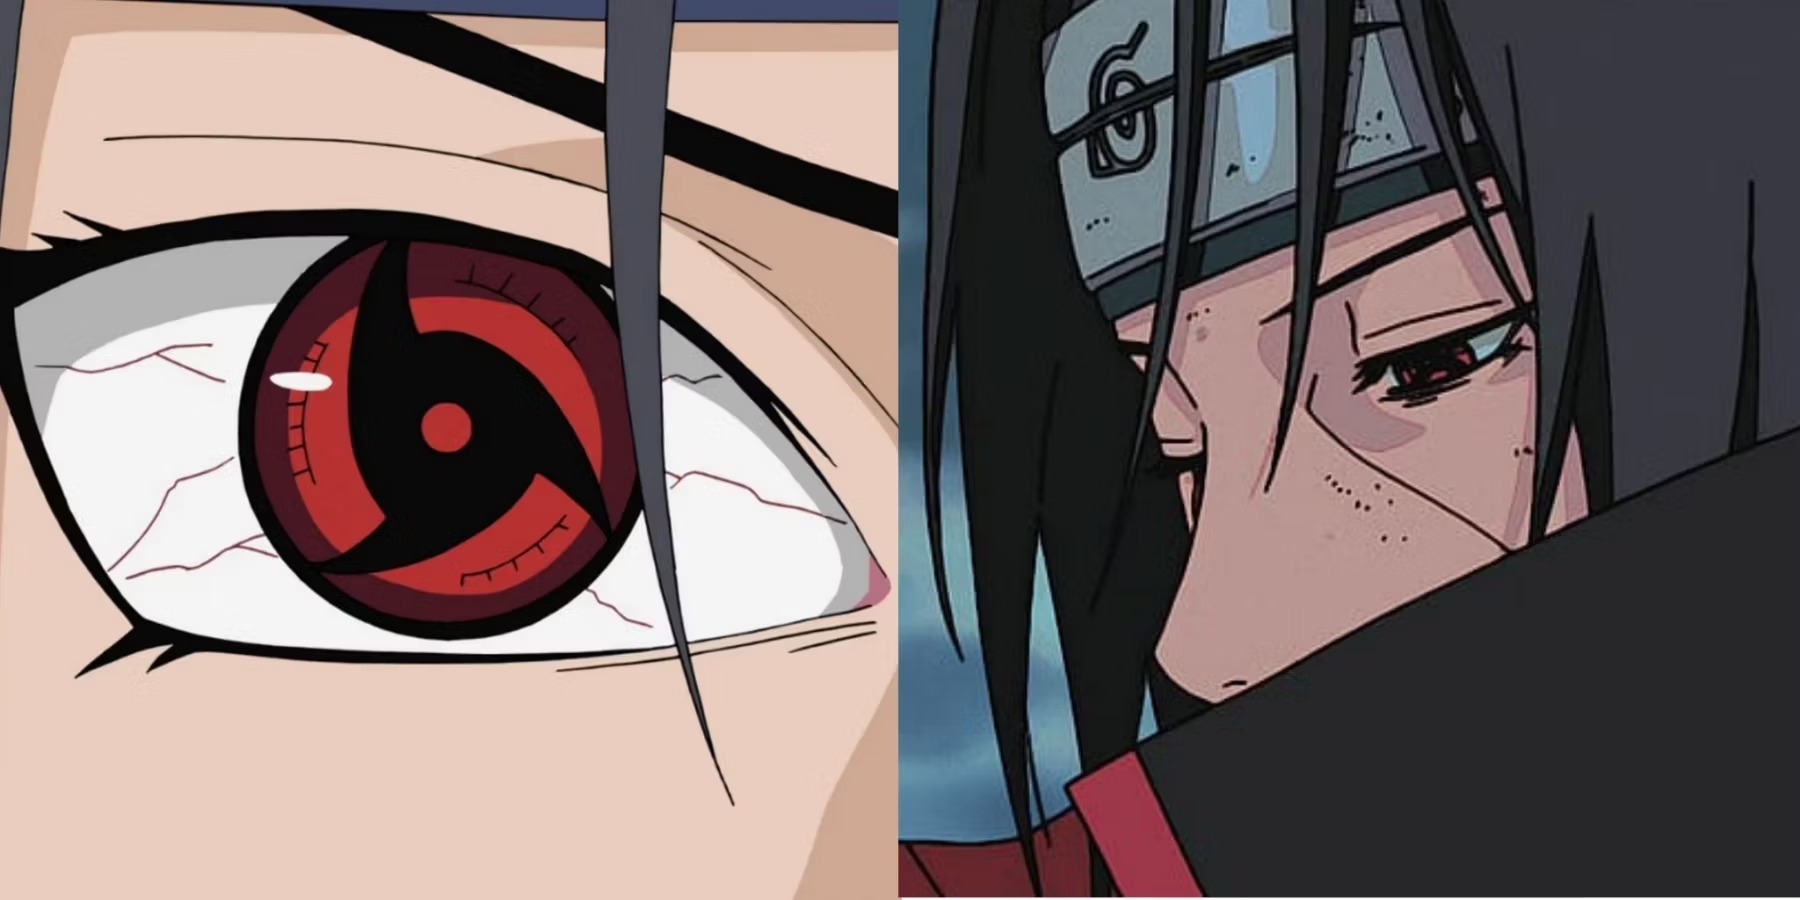 Entenda tudo sobre o Mangekyo Sharingan de Itachi e seus poderes em Naruto